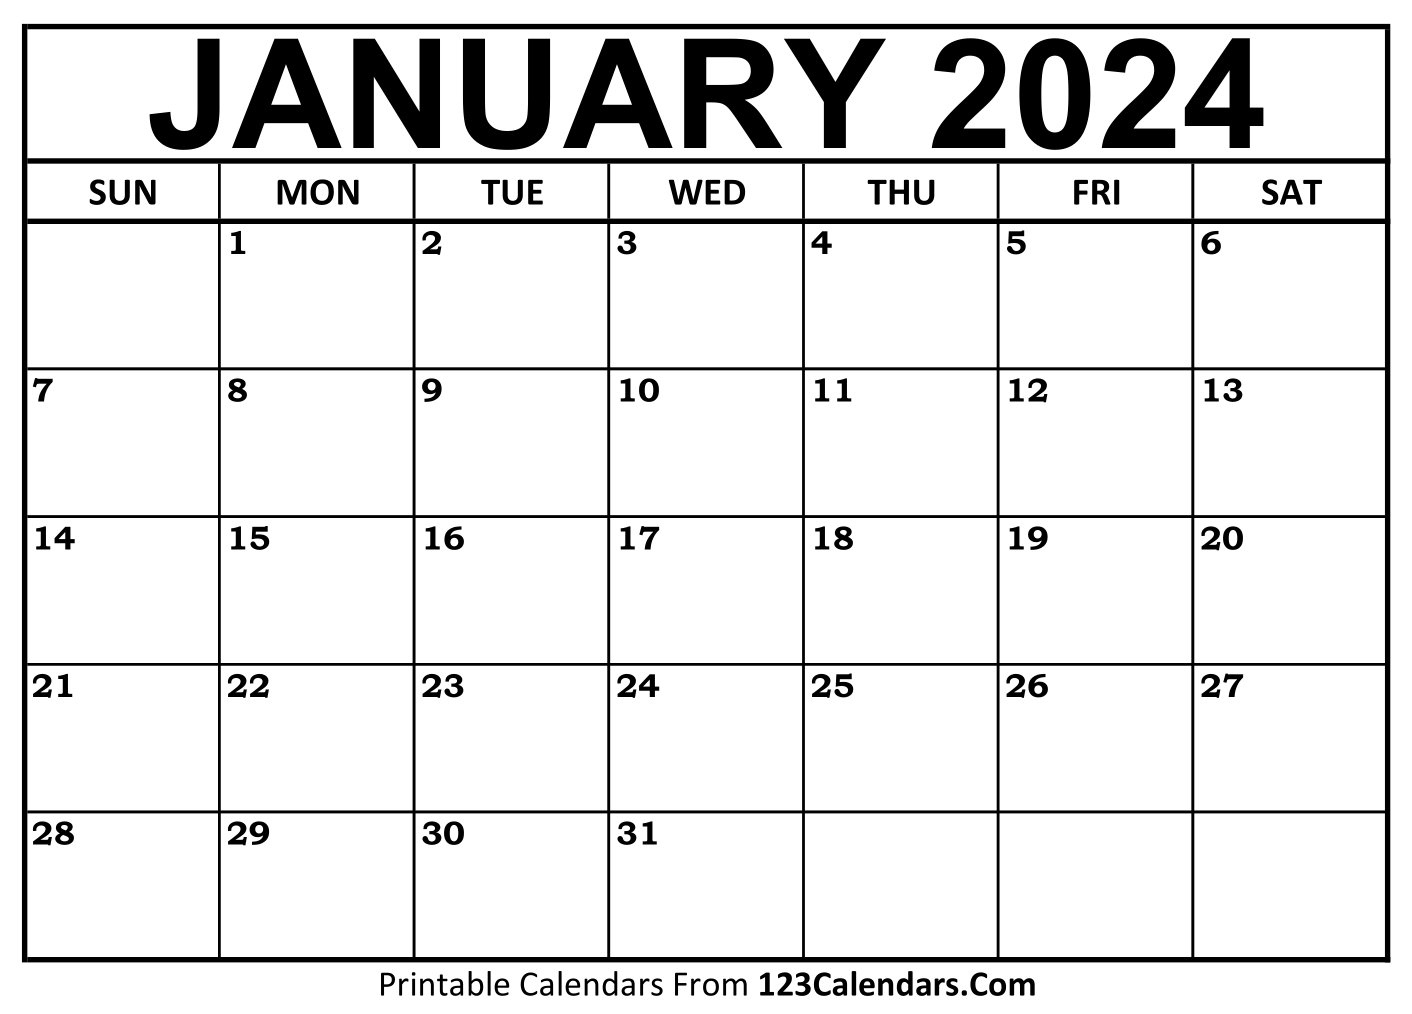 Printable January 2024 Calendar Templates - 123Calendars | Printable Calendar 2024 Free